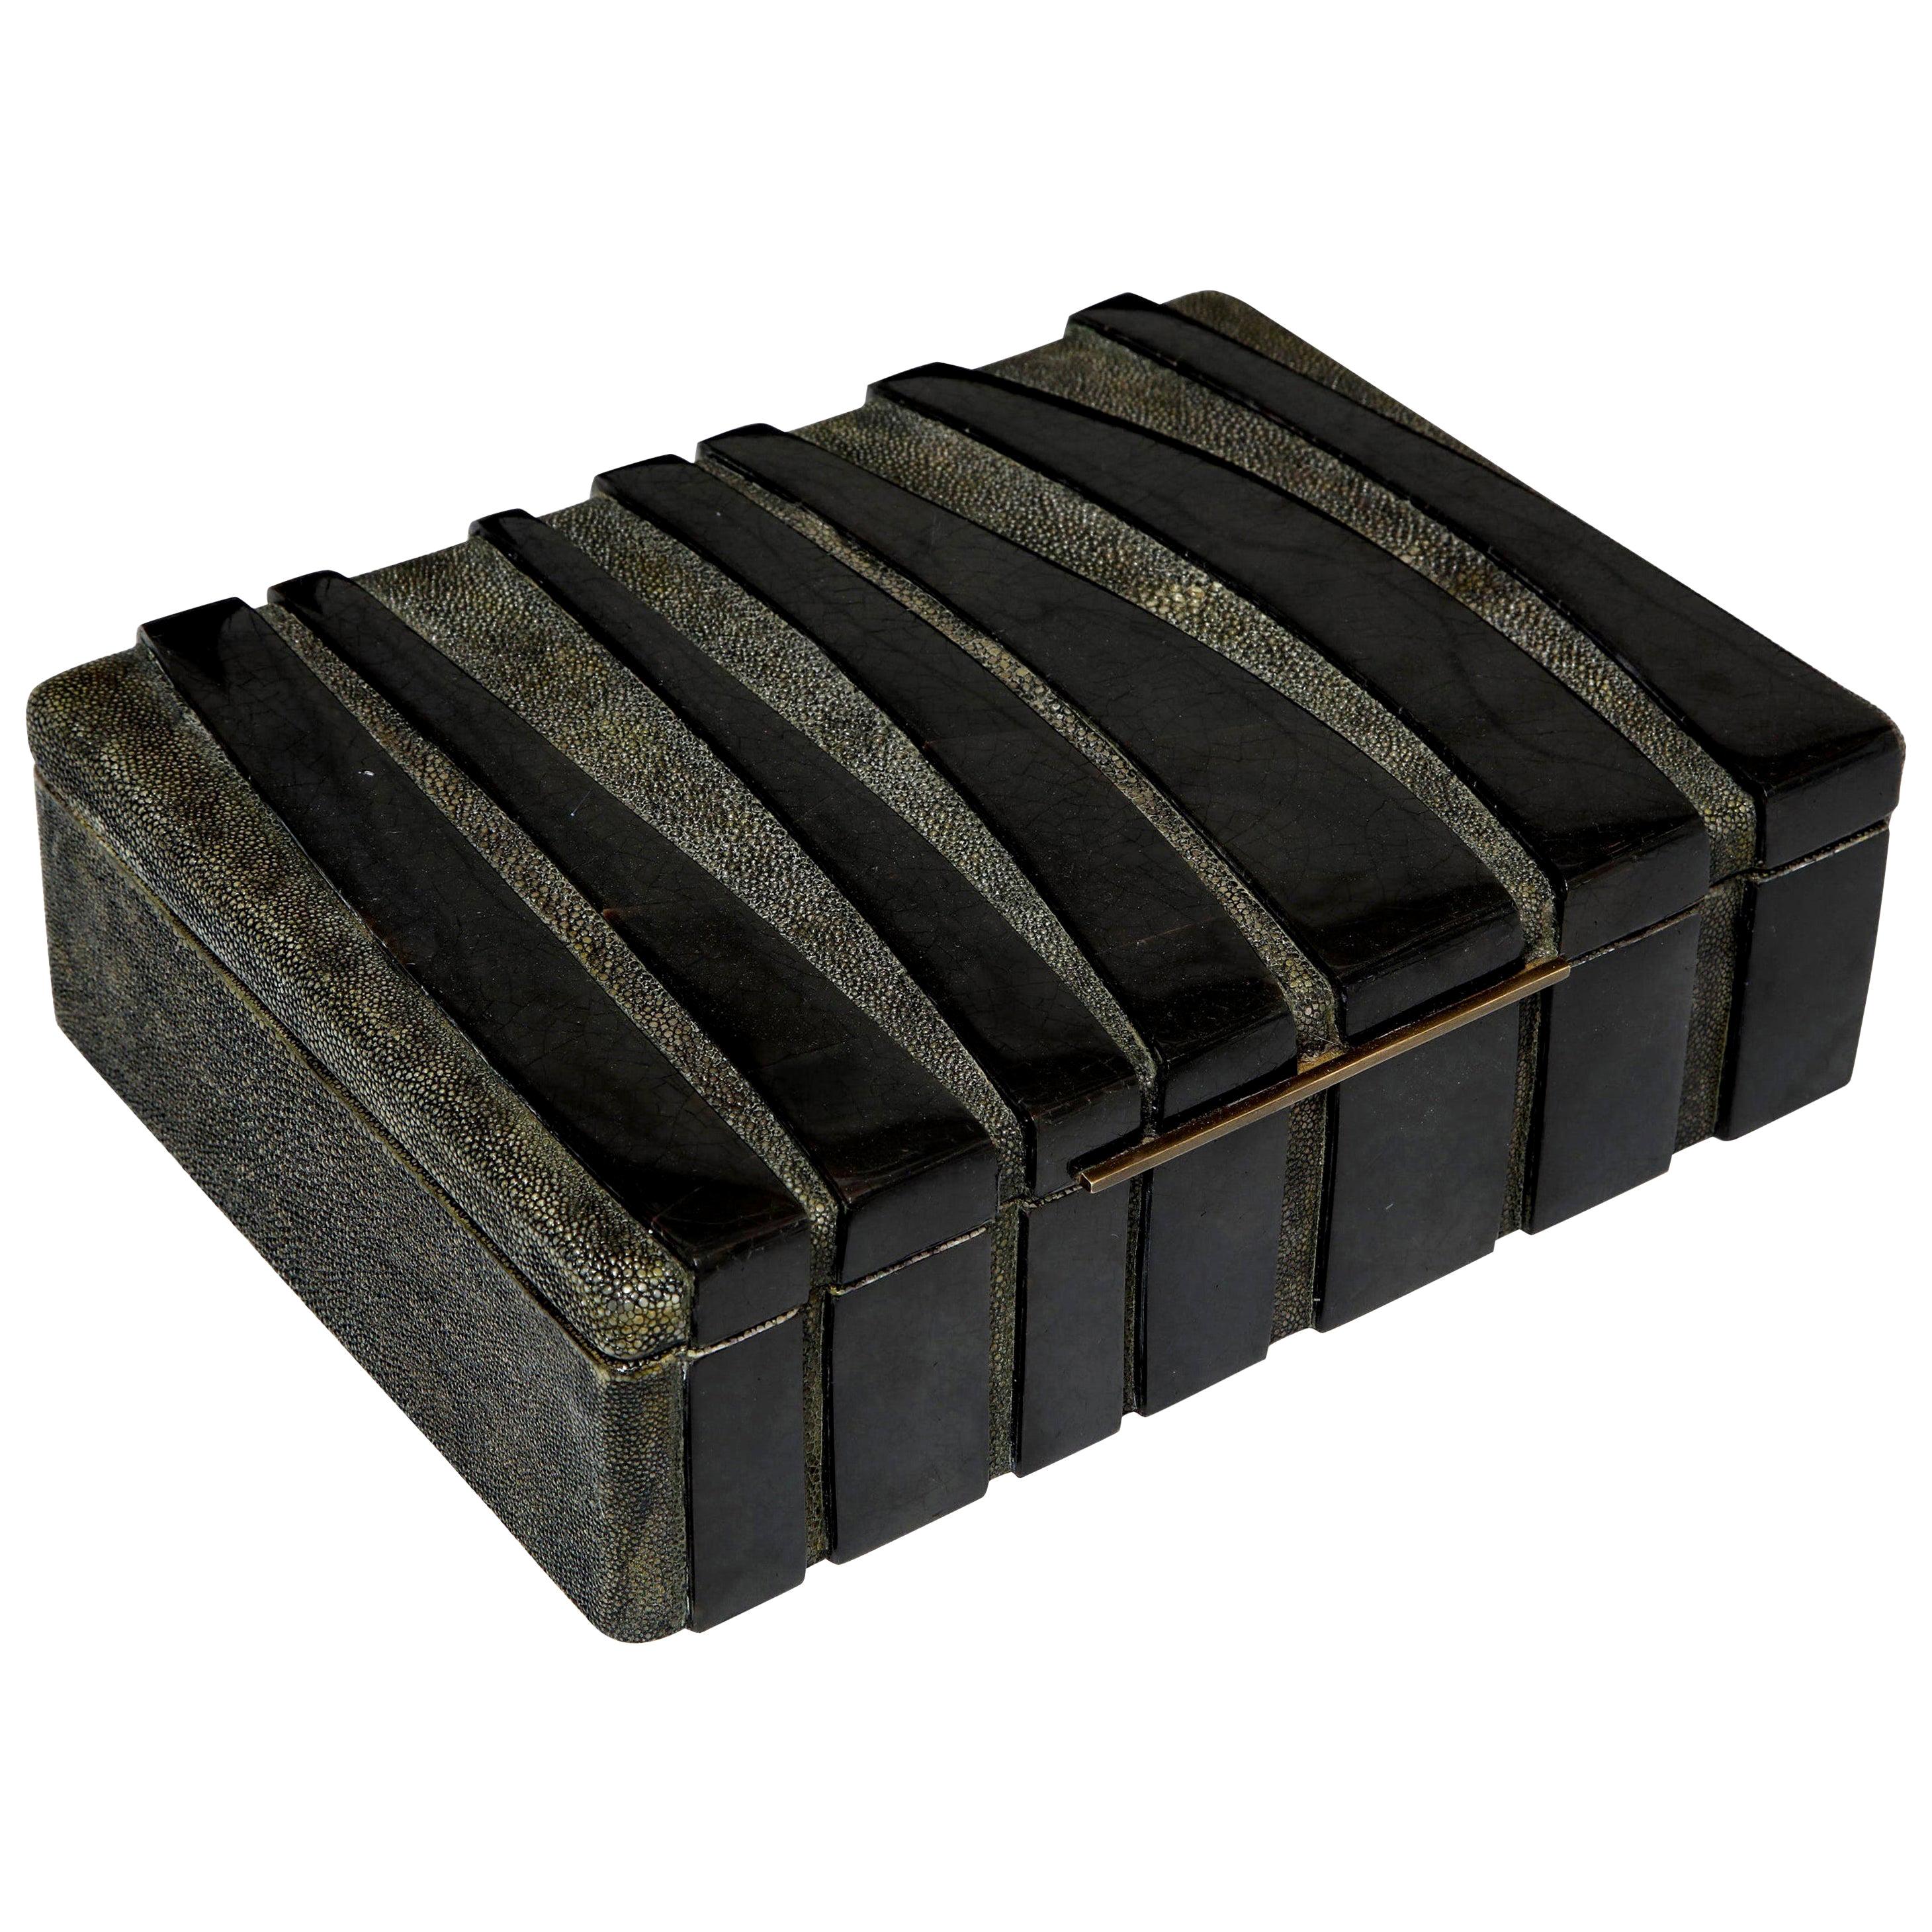 Shagreen Decorative Box, Black Shagreen and Palm Wood Details